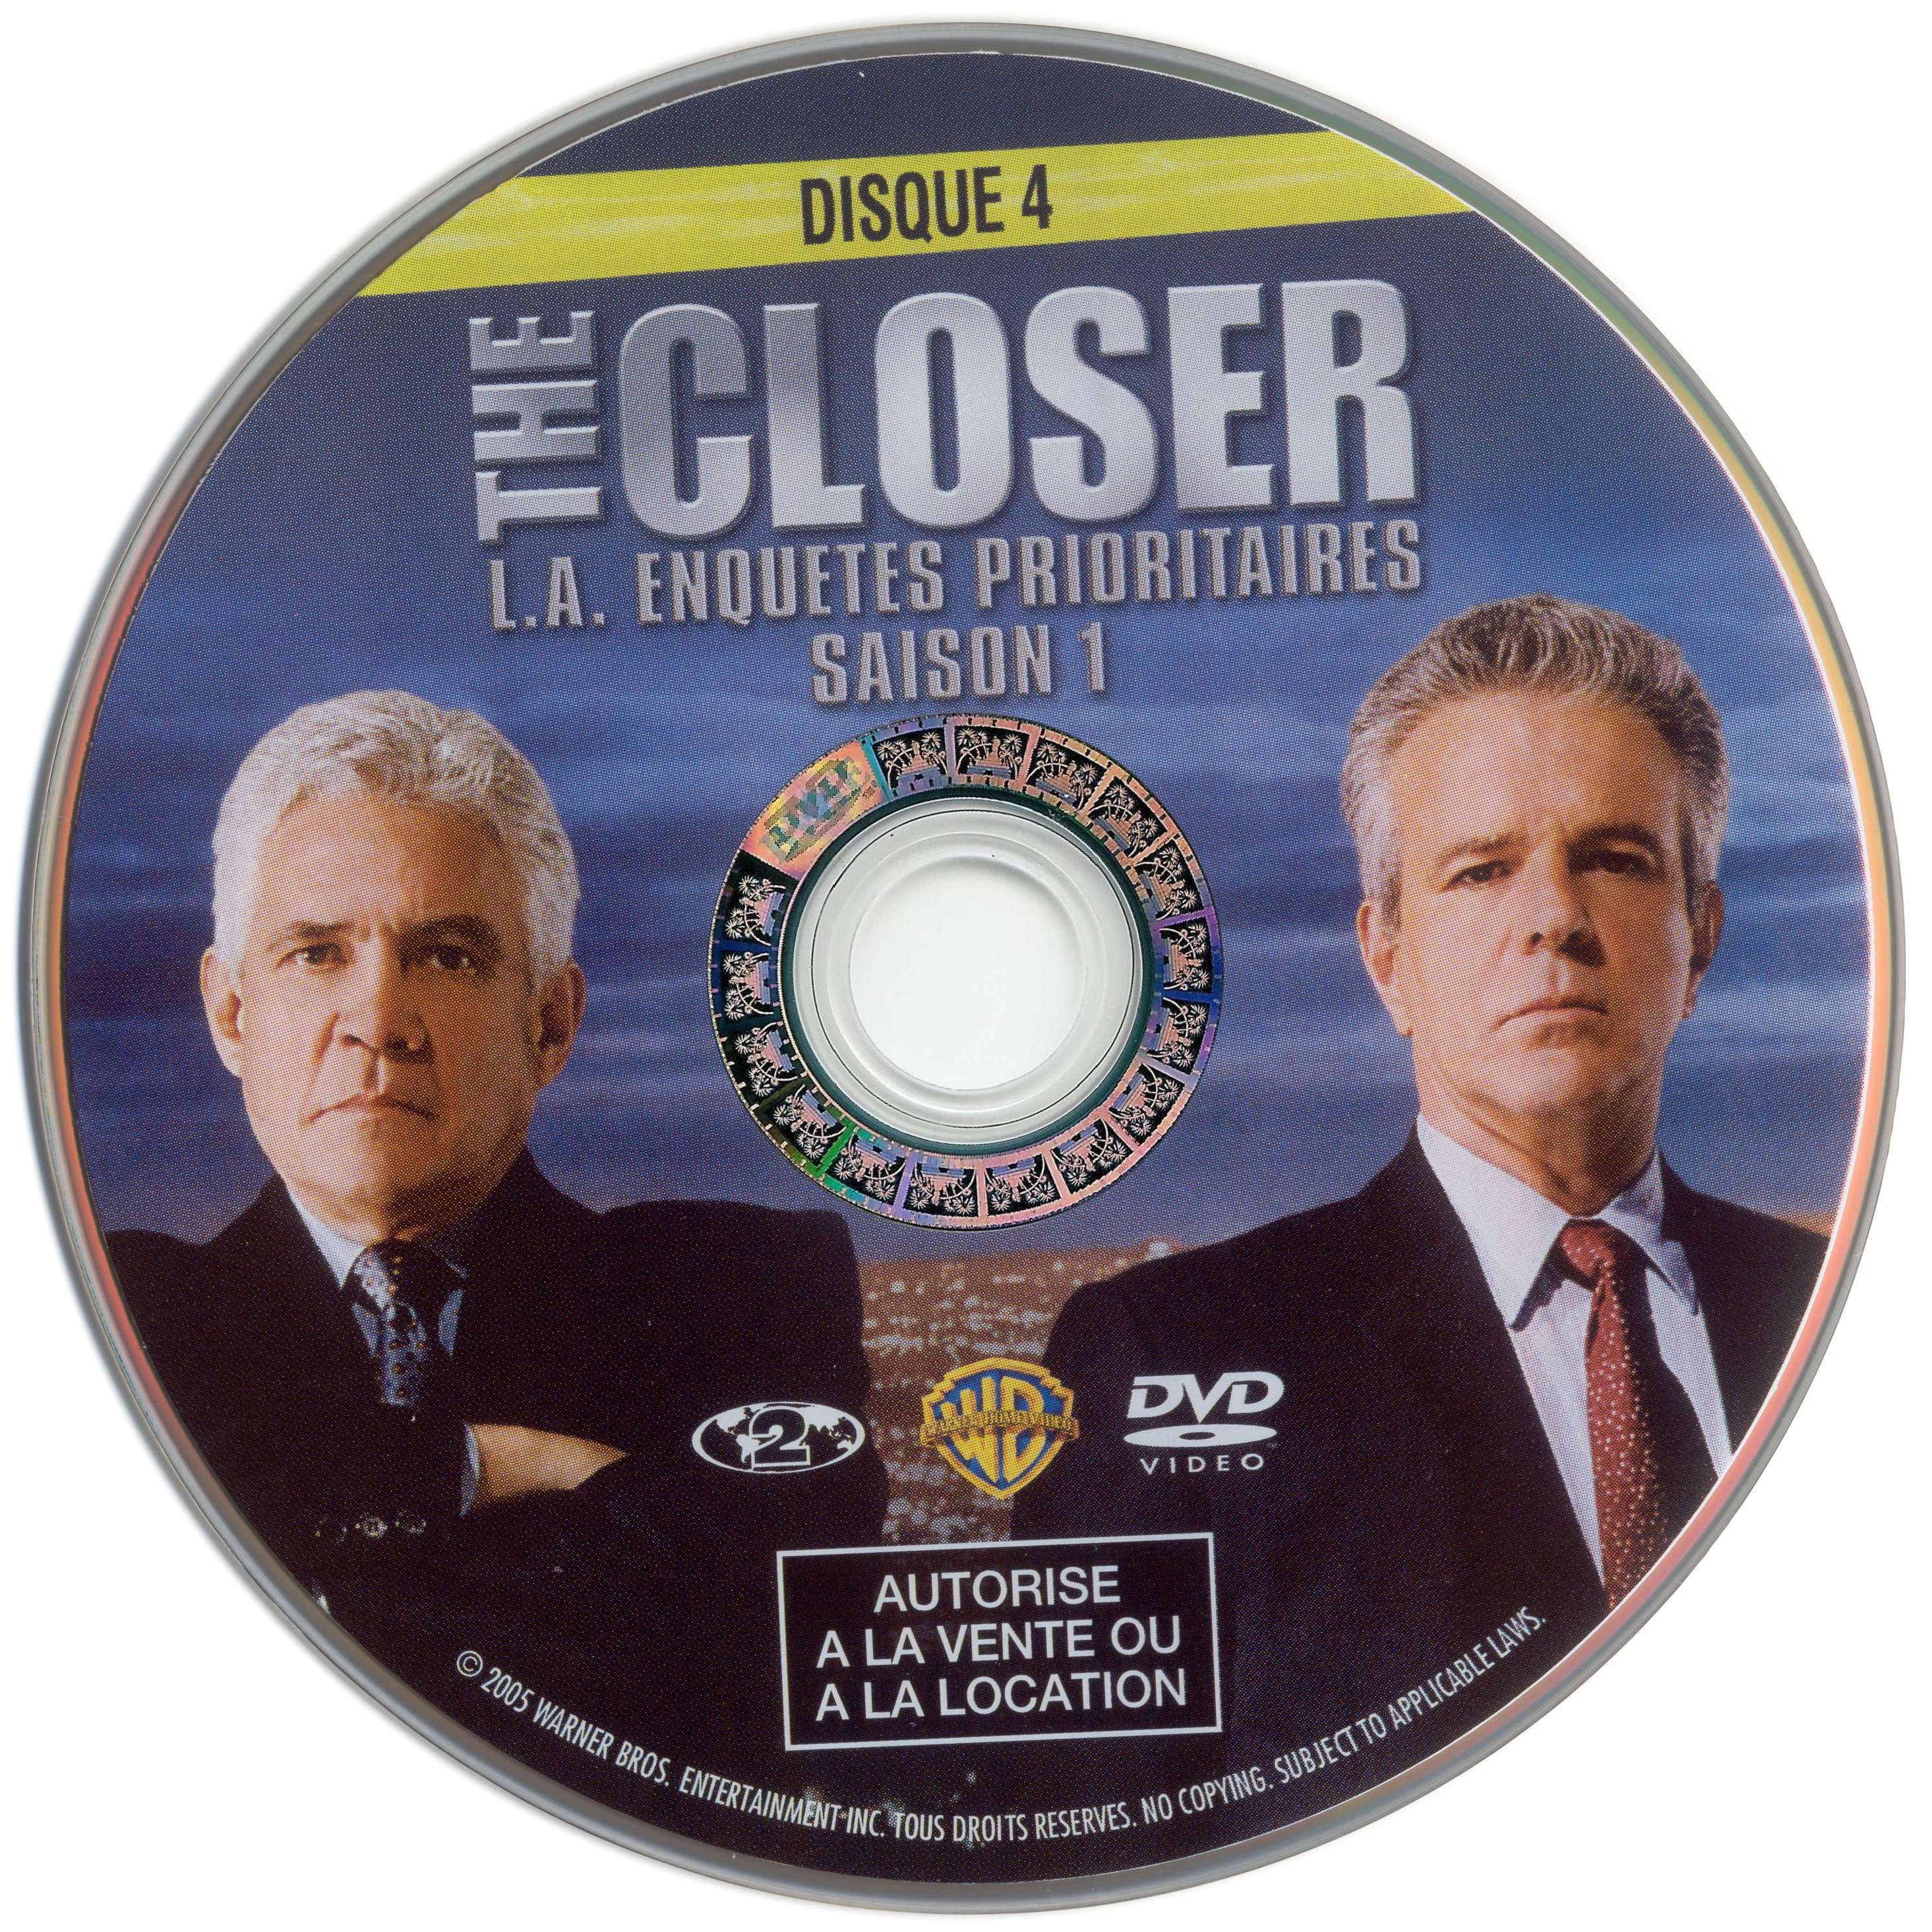 The closer Saison 1 DISC 4